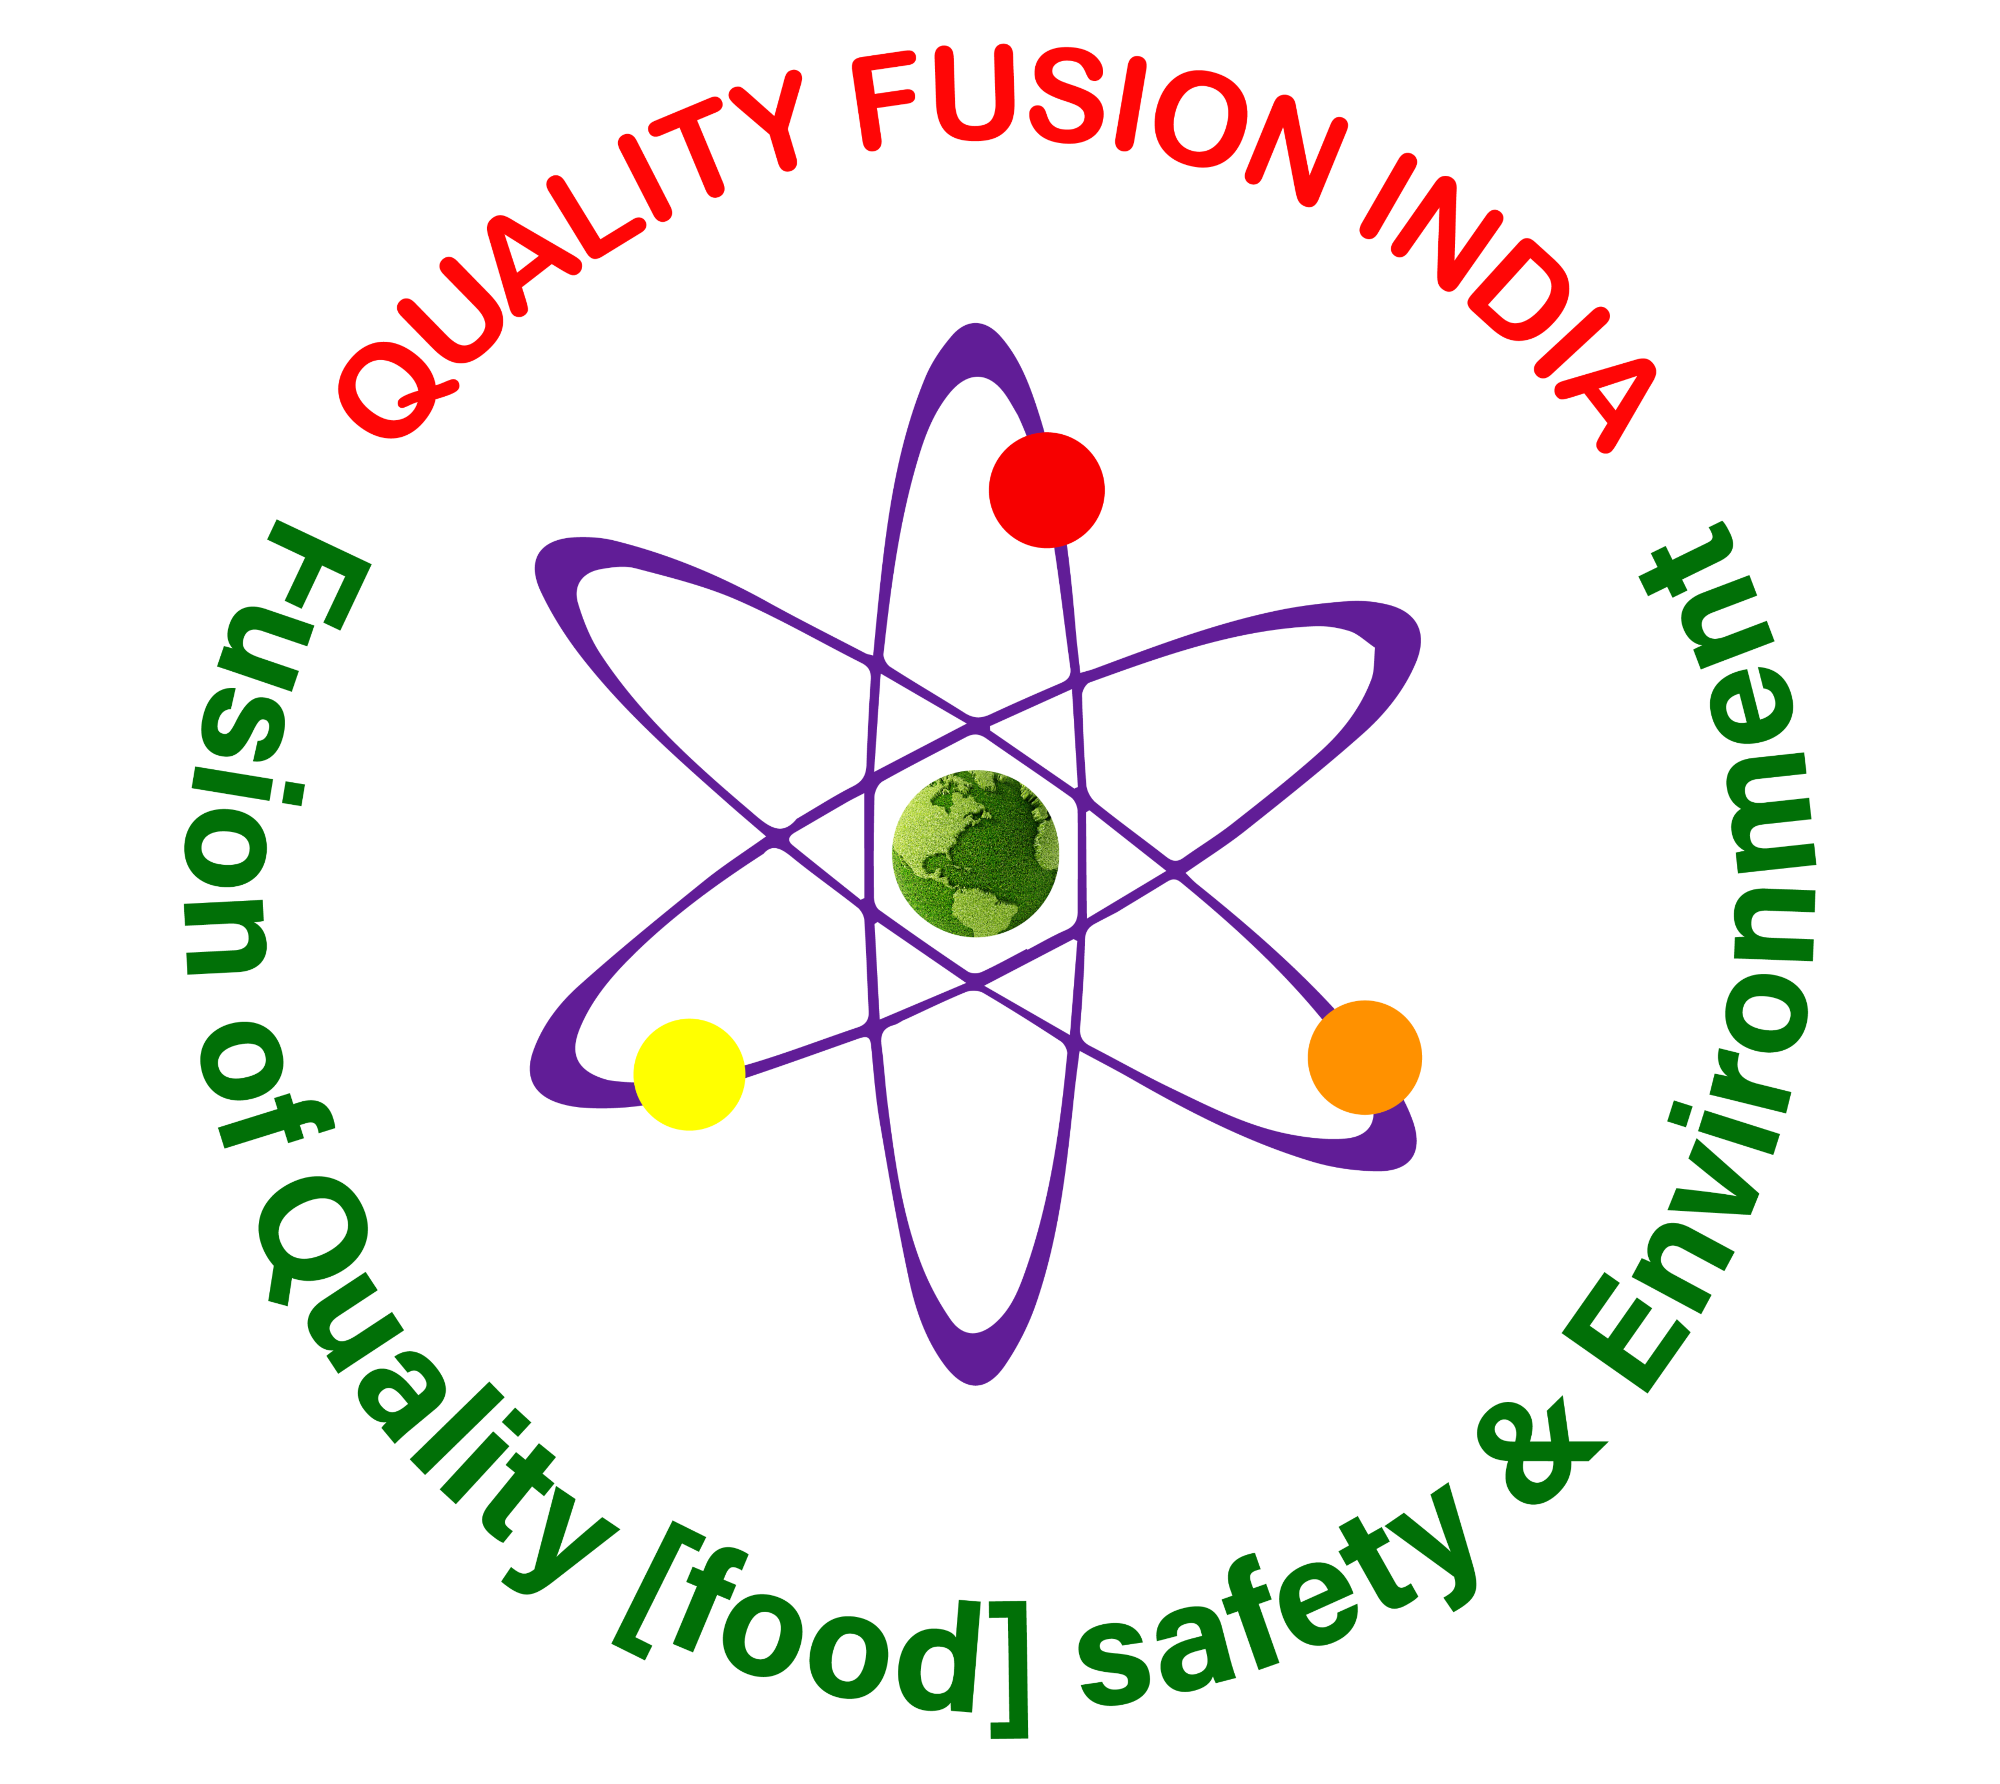 Quality Fusion India Logo